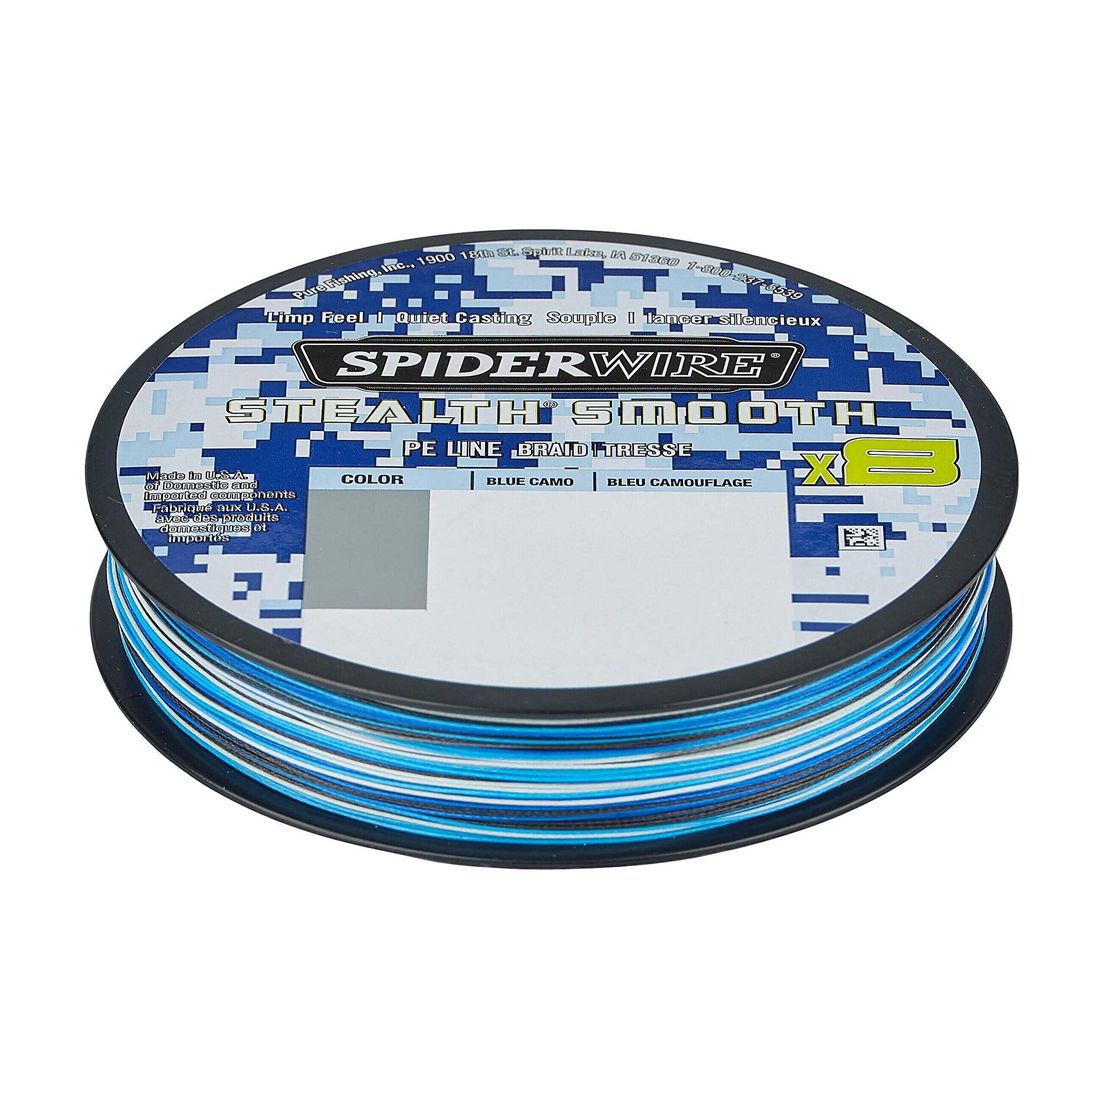 SpiderWire Stealth Smooth Blue Camo Braid